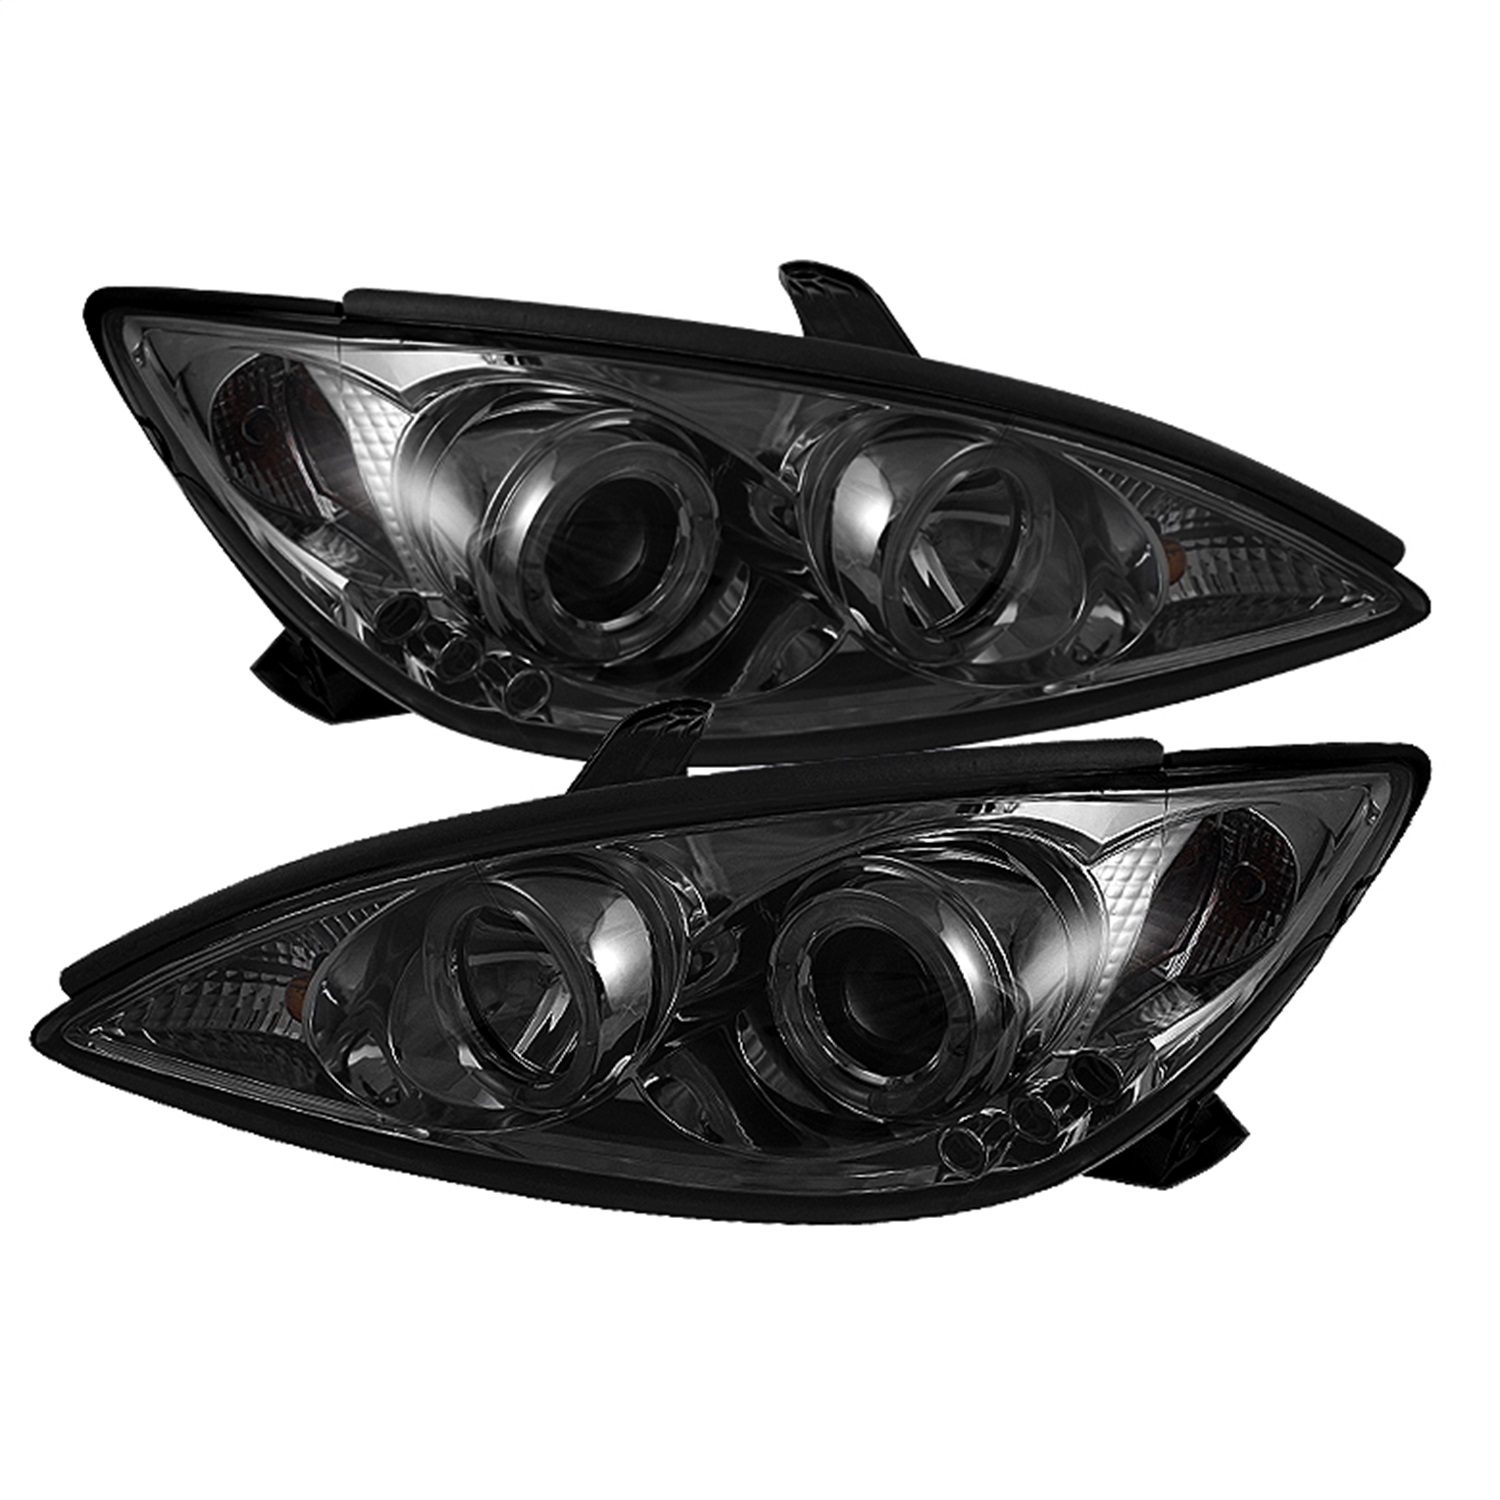 Spyder Auto 5064325 Halo Projector Headlights Fits 02-06 Camry